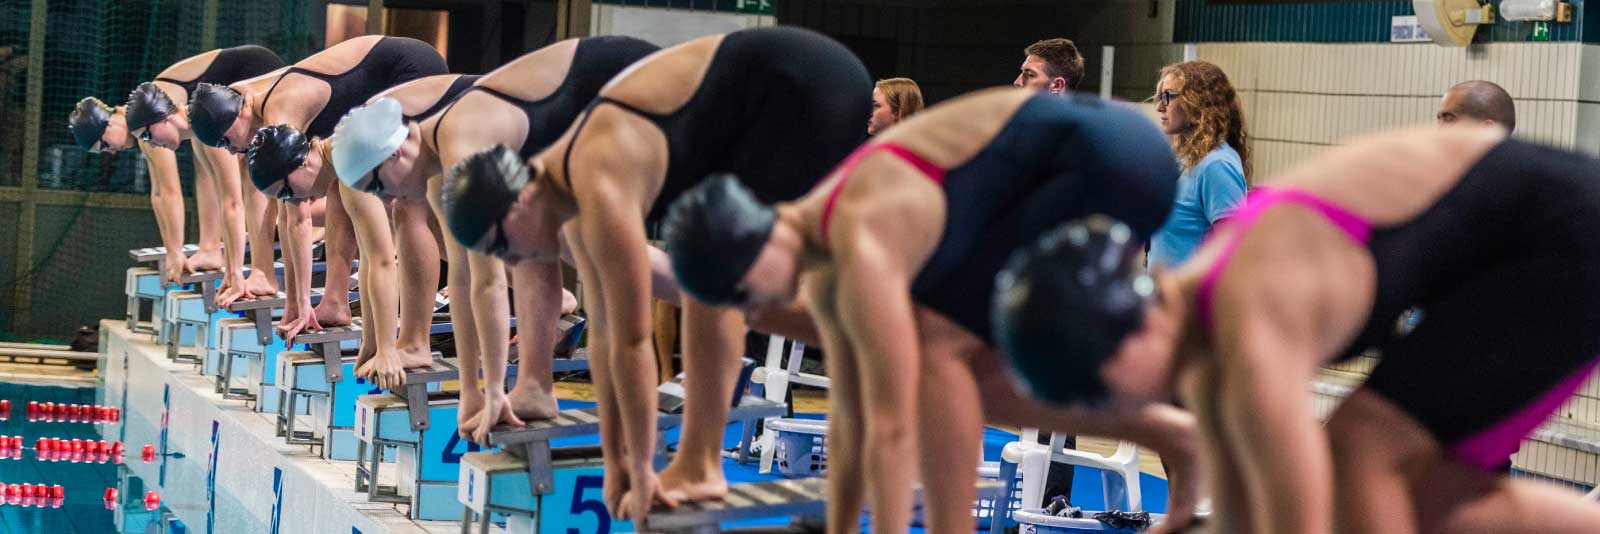 202223 NCAA Women’s Swimming Recruiting Rules and Calendar